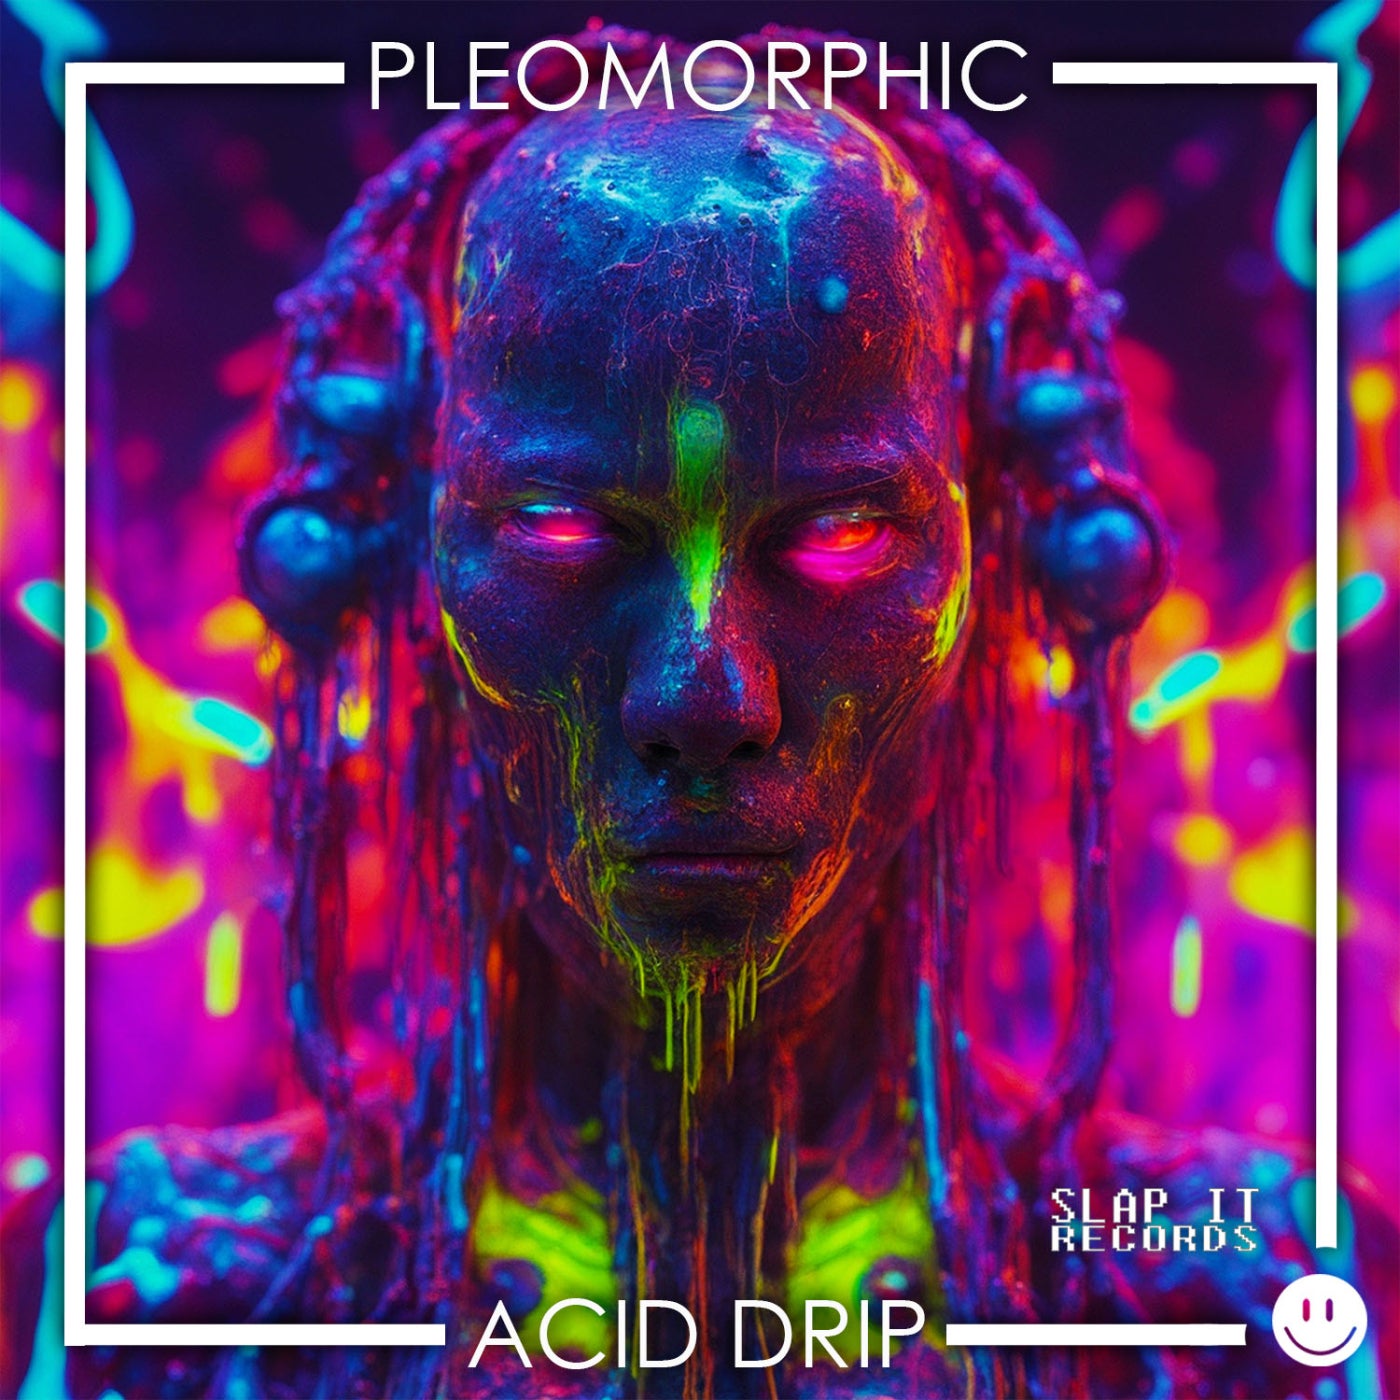 Acid Drip